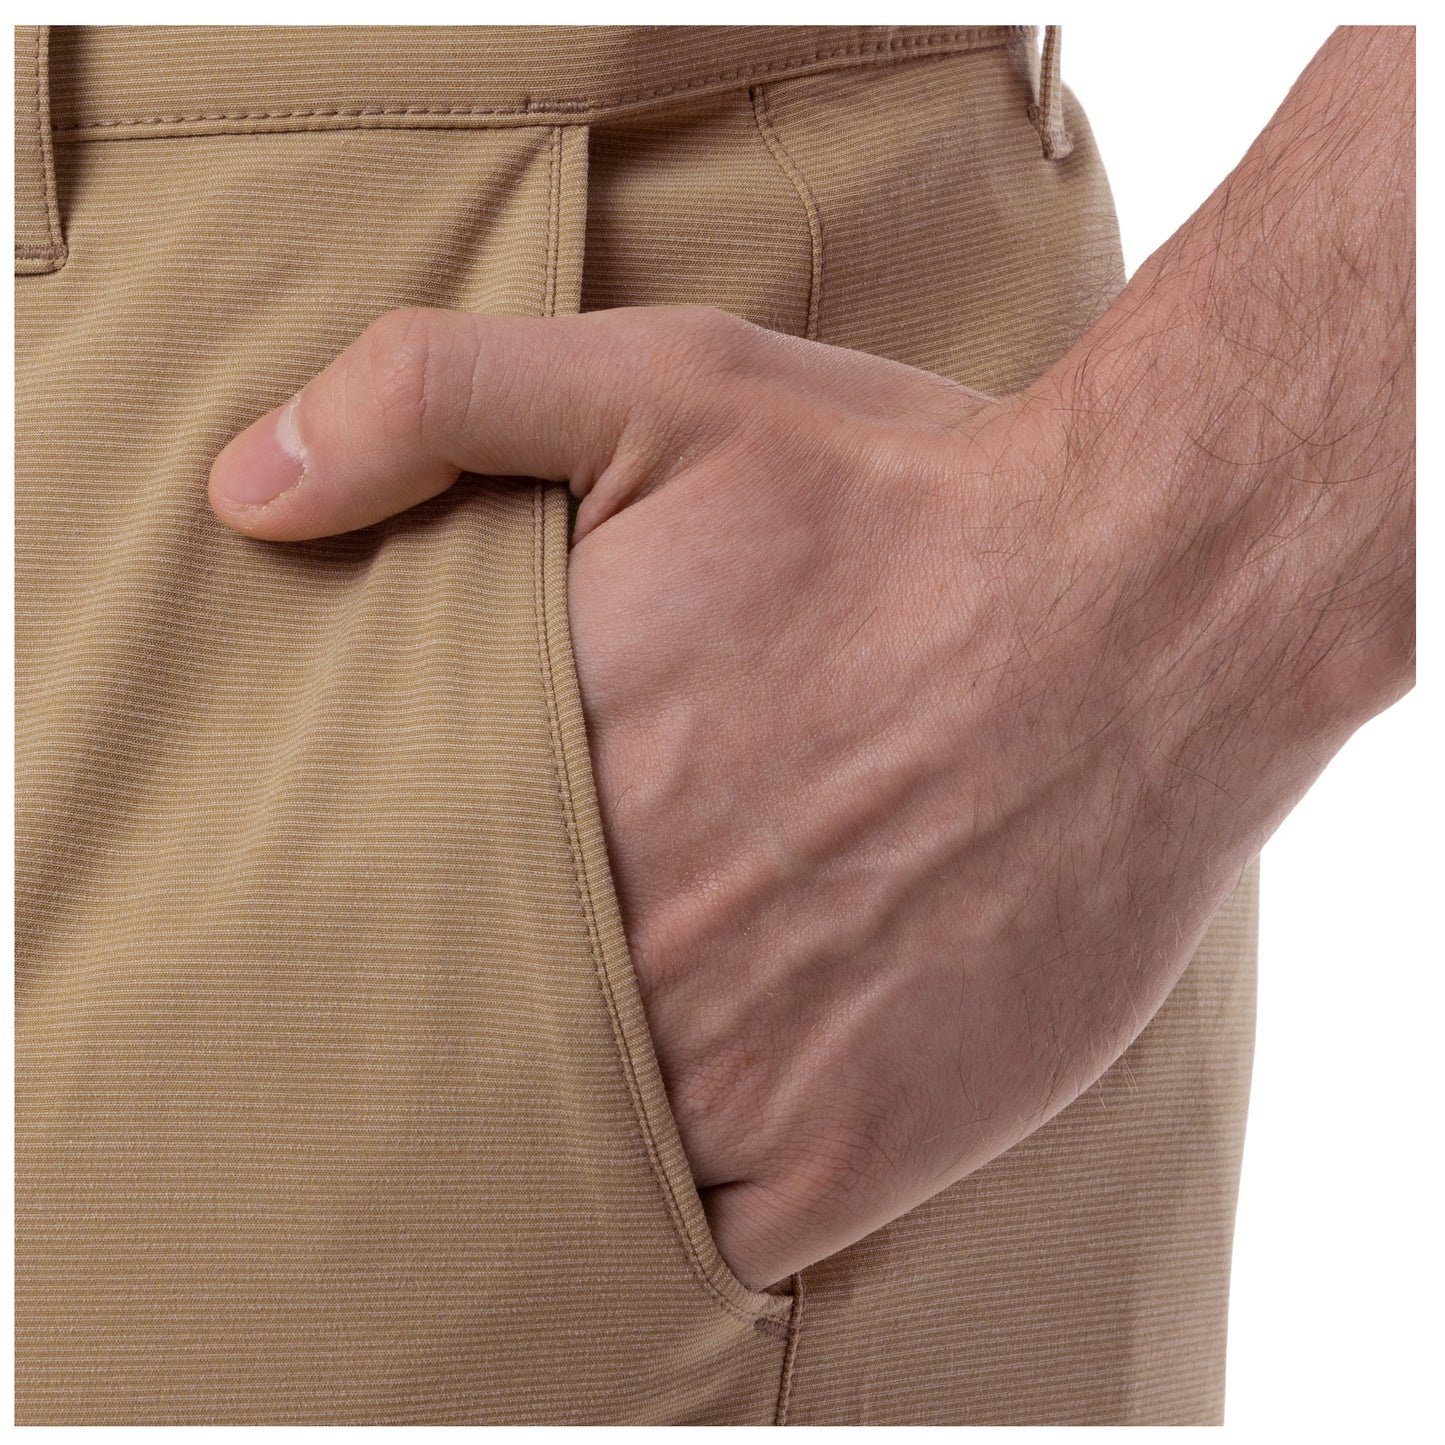 Men's Khaki Performance Hybrid Short 4-Way Stretch View 8